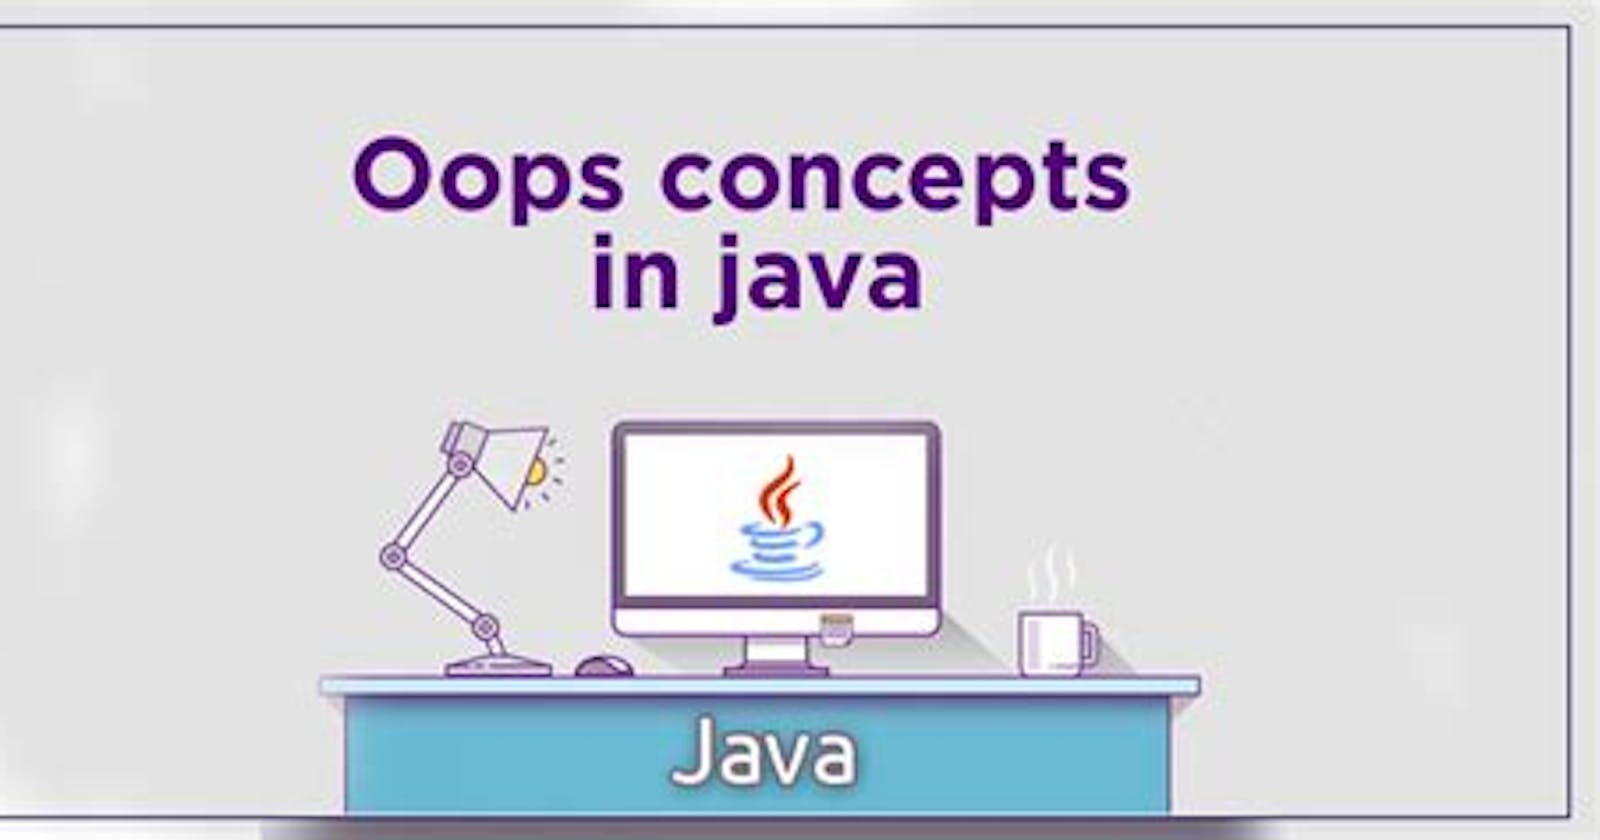 Java OOP Concepts Cheat Sheet